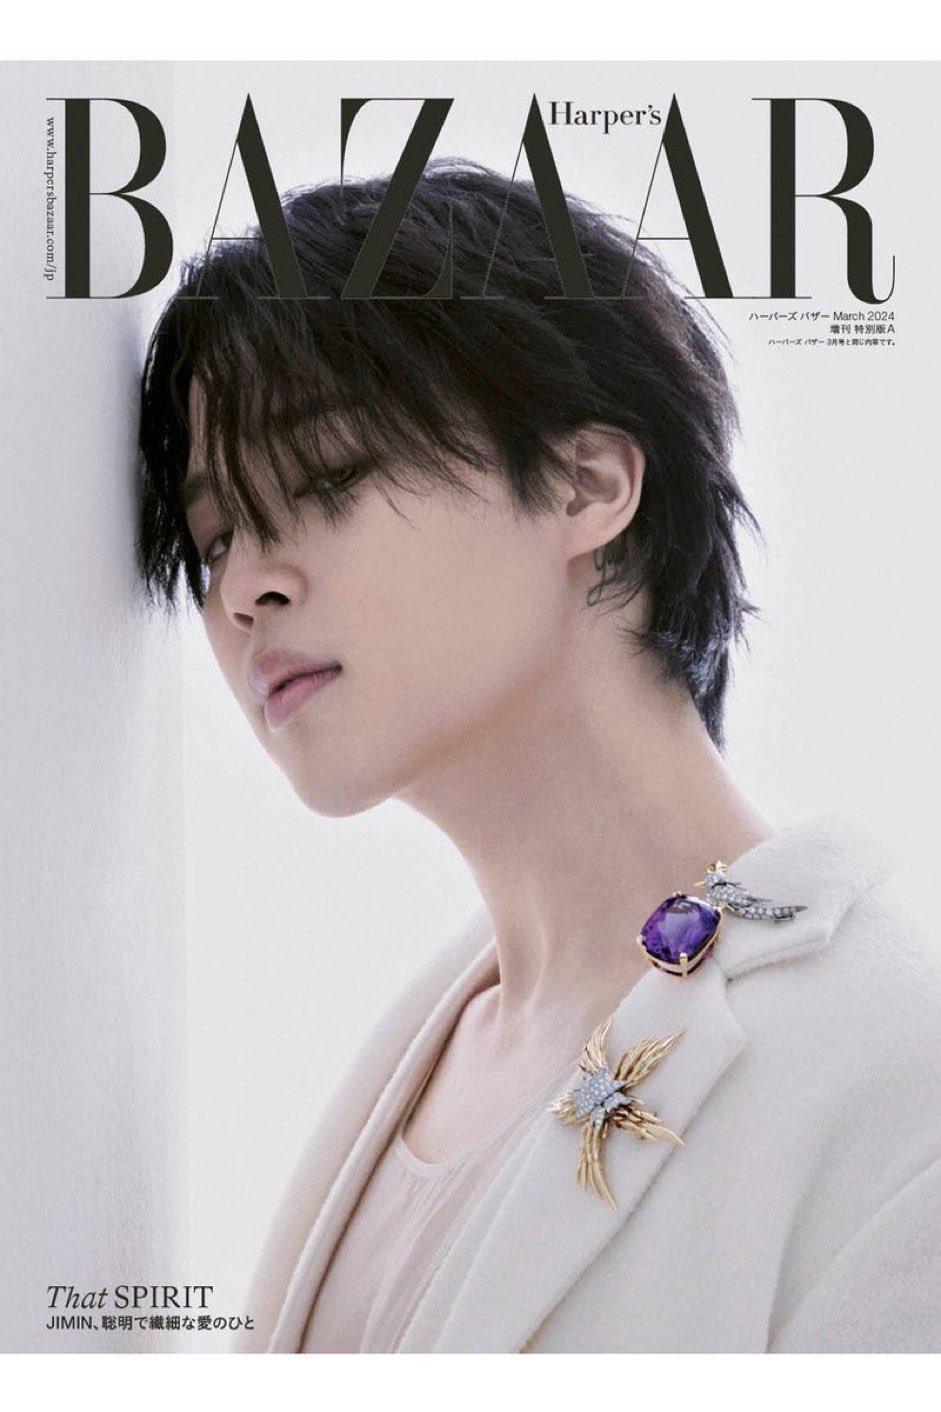 JIMIN (BTS) - BAZAAR JAPAN MAGAZINE COVER (March Special Issue) - KAEPJJANG SHOP (캡짱 숍)